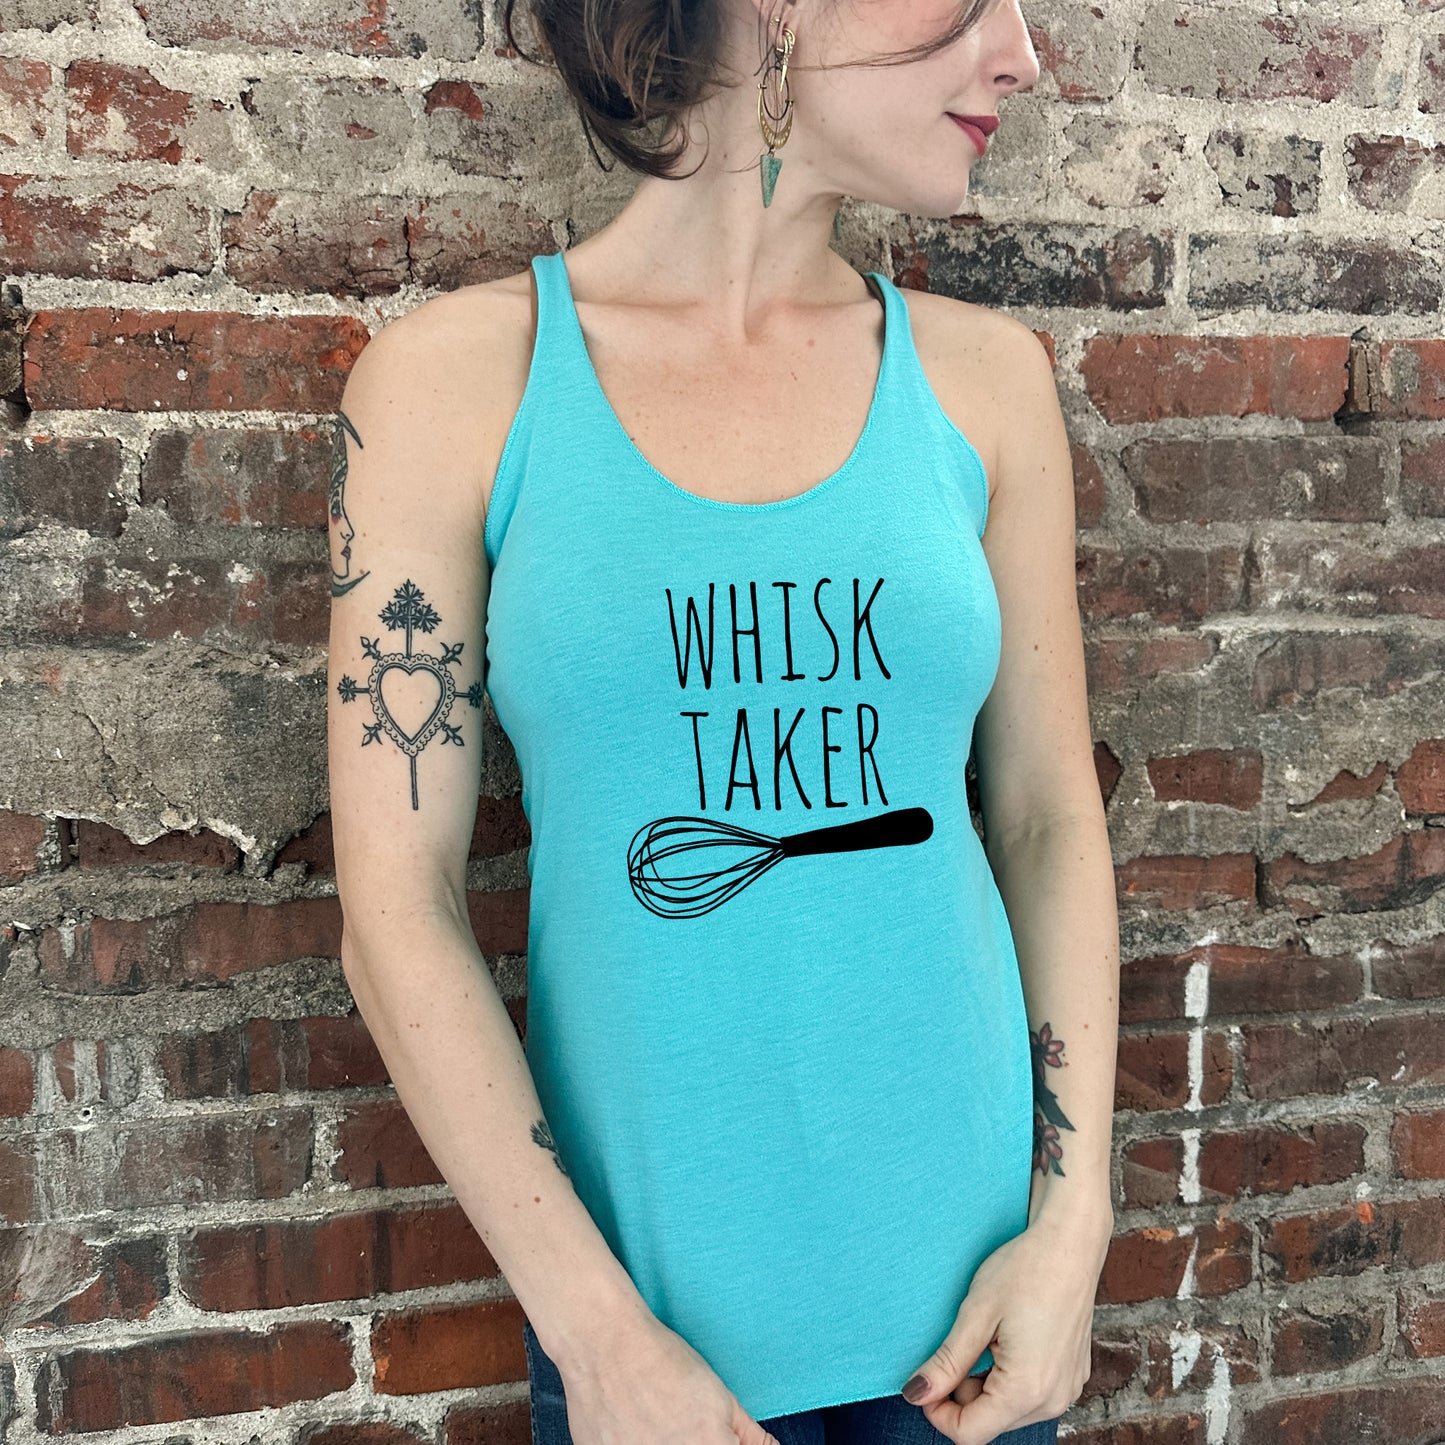 Whisk Taker (Baking) - Women's Tank - Heather Gray, Tahiti, or Envy